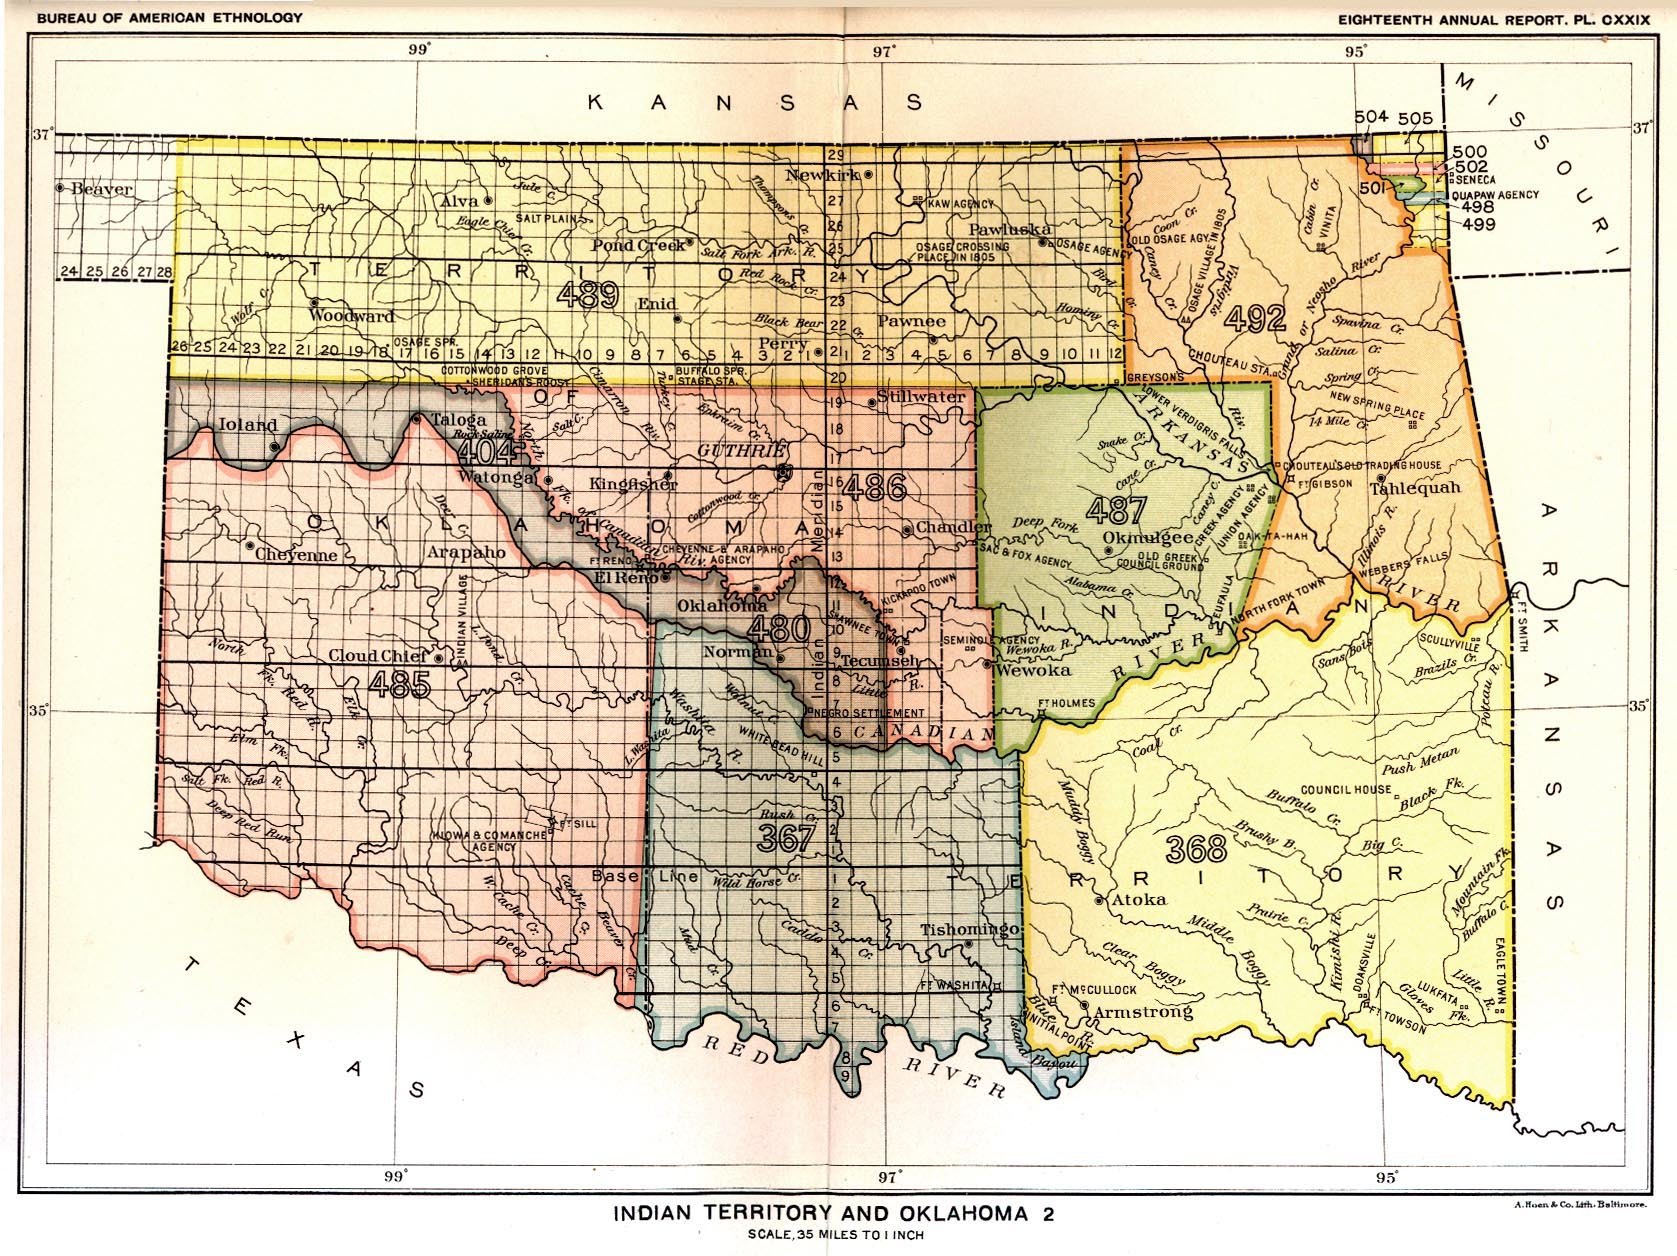  Indian Territory & Oklahoma 2, Map 22